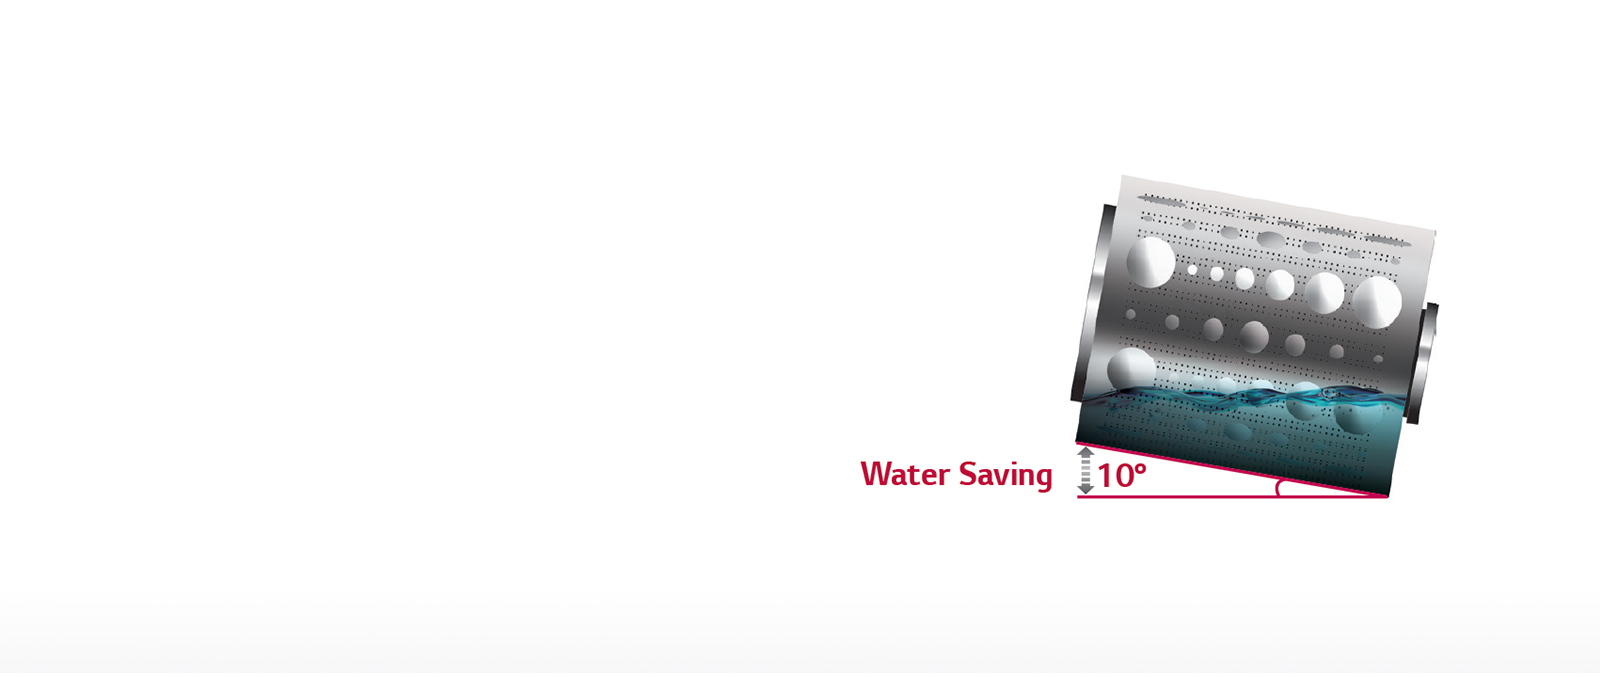 <h3 class="text-normal">滚筒10°倾斜</h3><p>LG商用洗衣机滚筒倾斜了10度，使得在同等水量的情况下，获得更高的水位，使用更少的水，获得同等的洗涤效果</p>